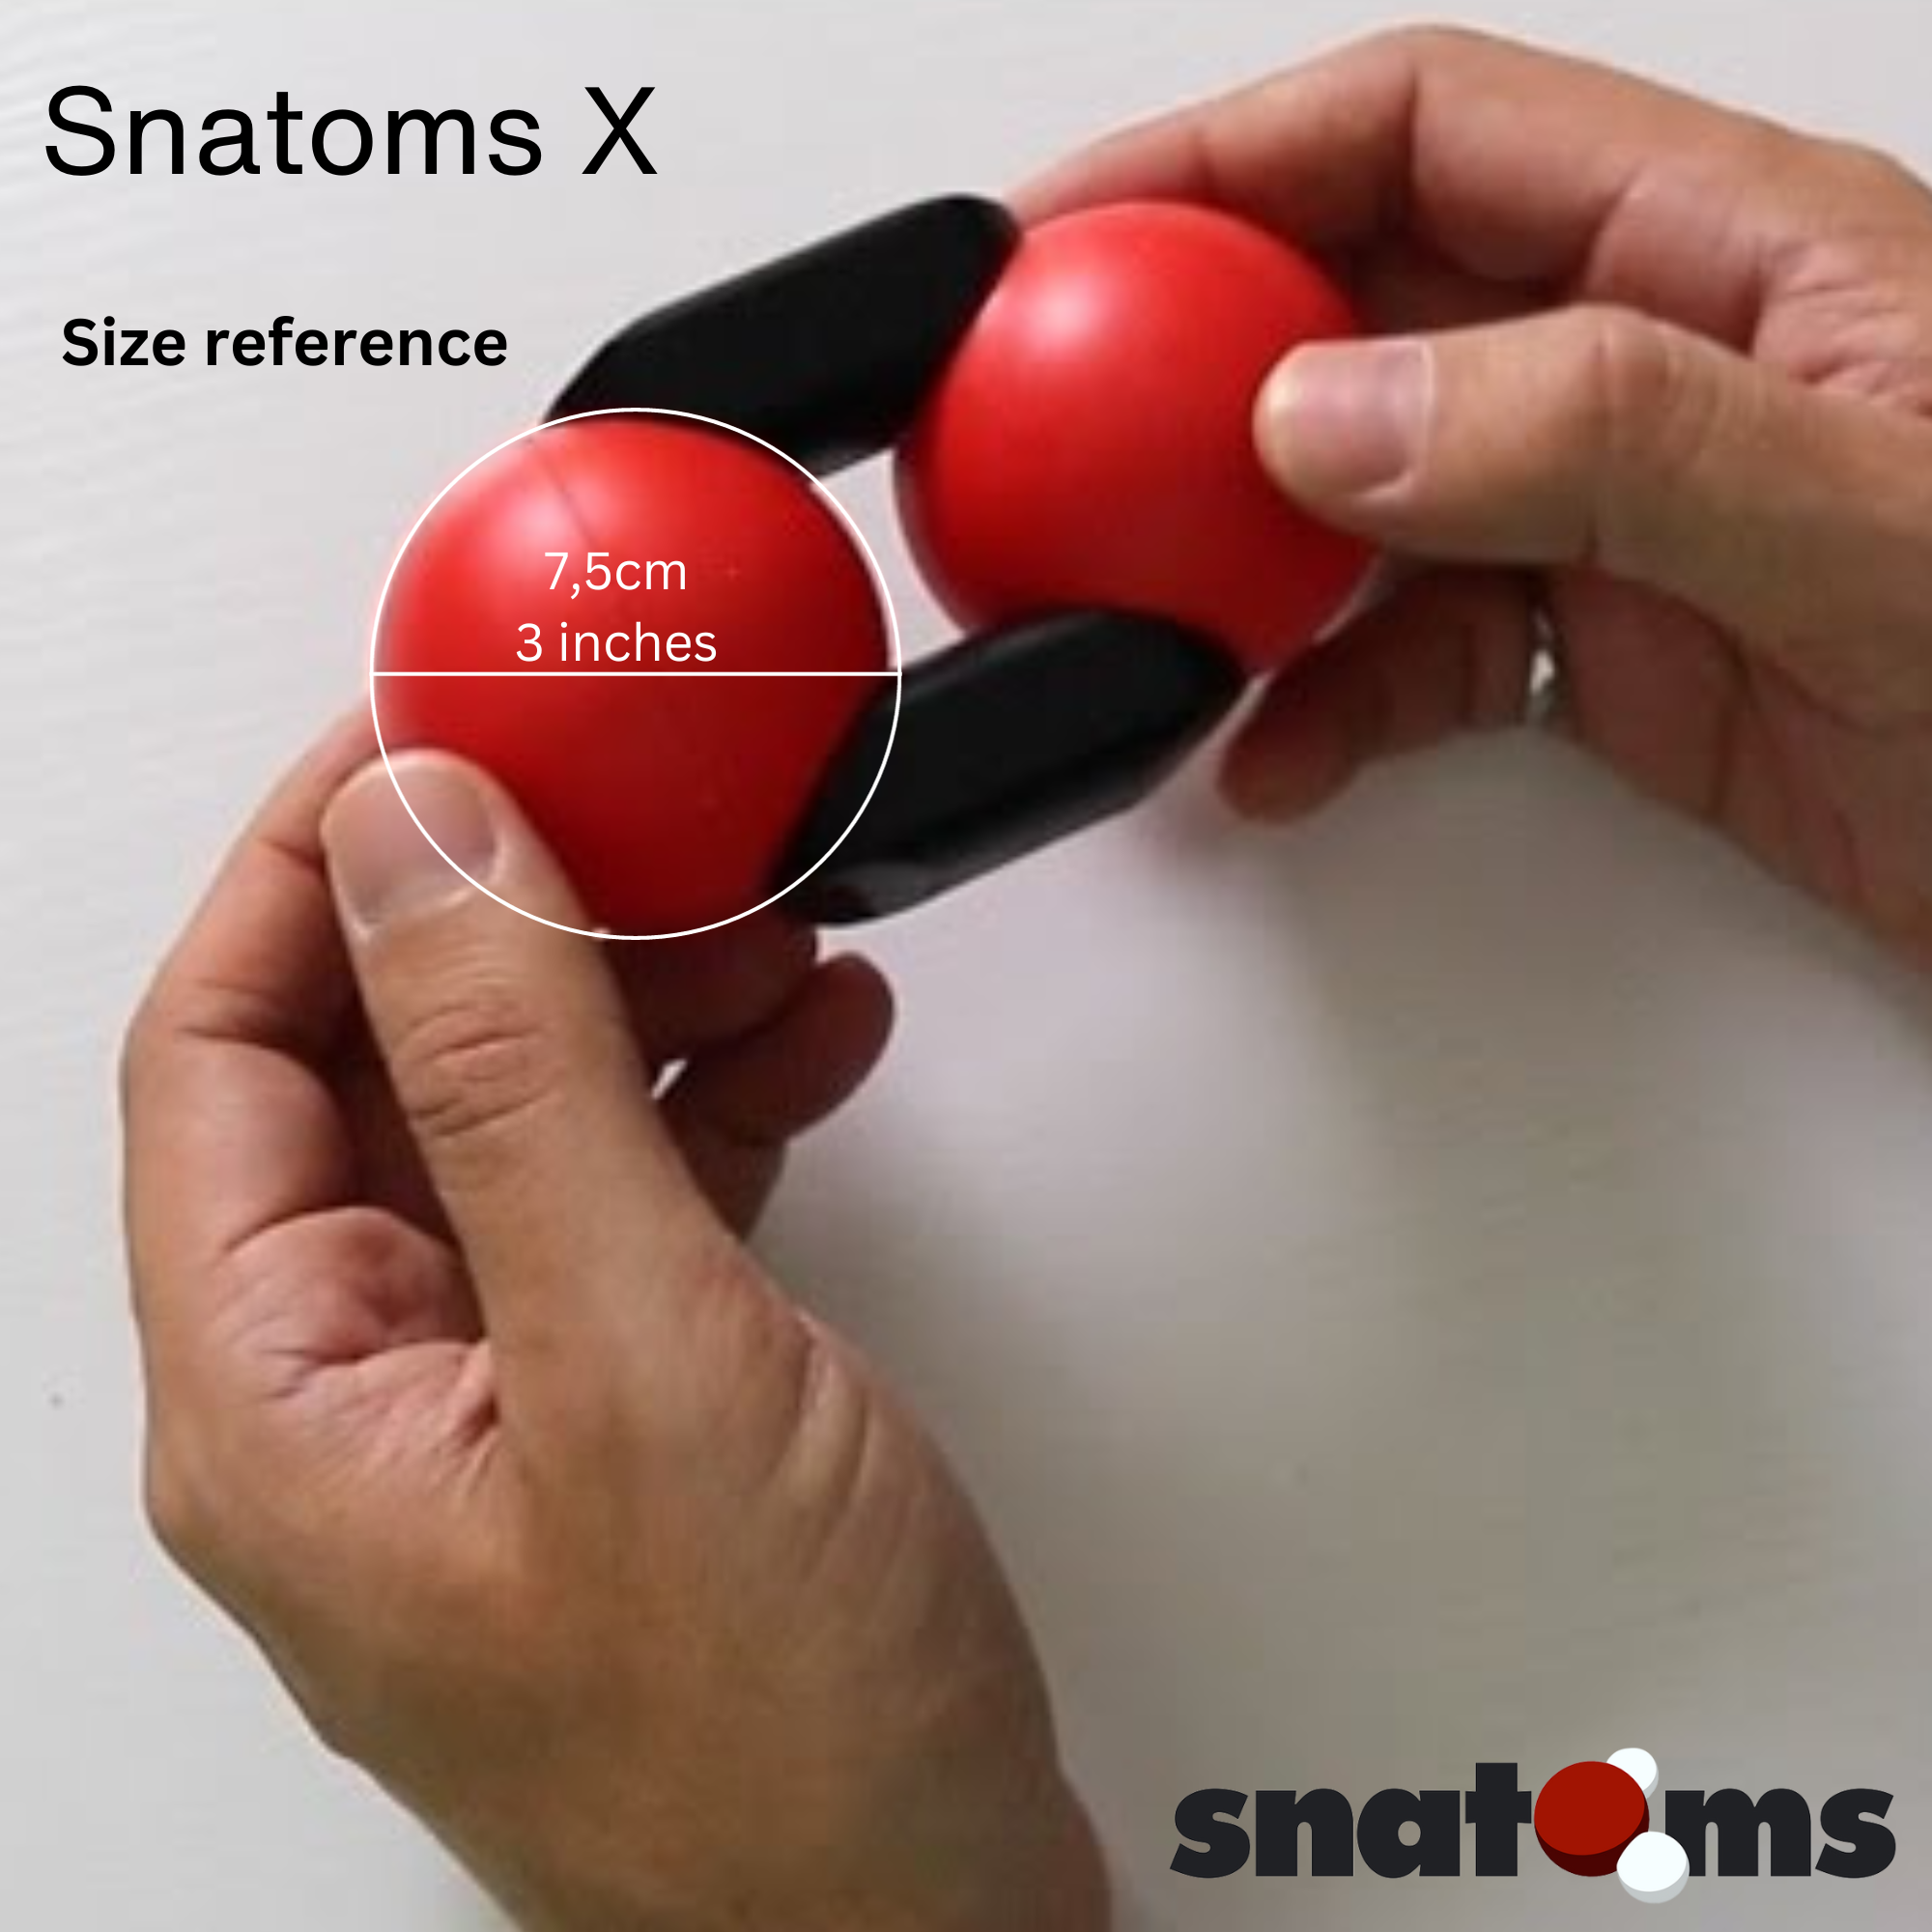 Snatoms X Complete Kit